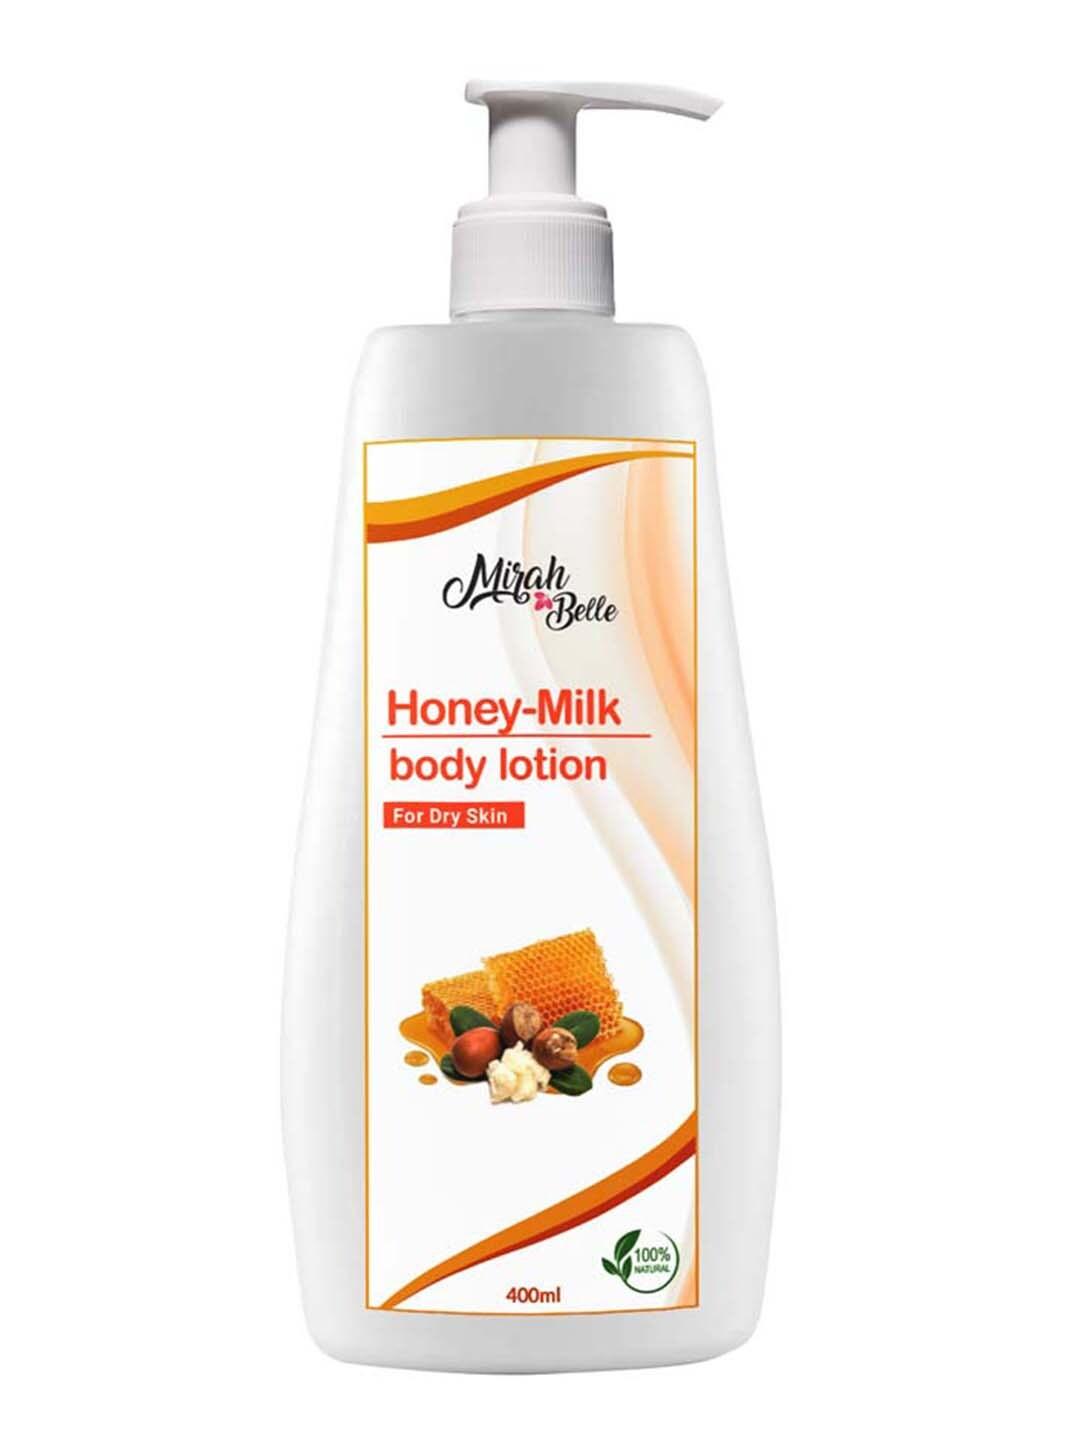 Mirah Belle Organic Honey & Milk Natural Body Lotion 400 ml